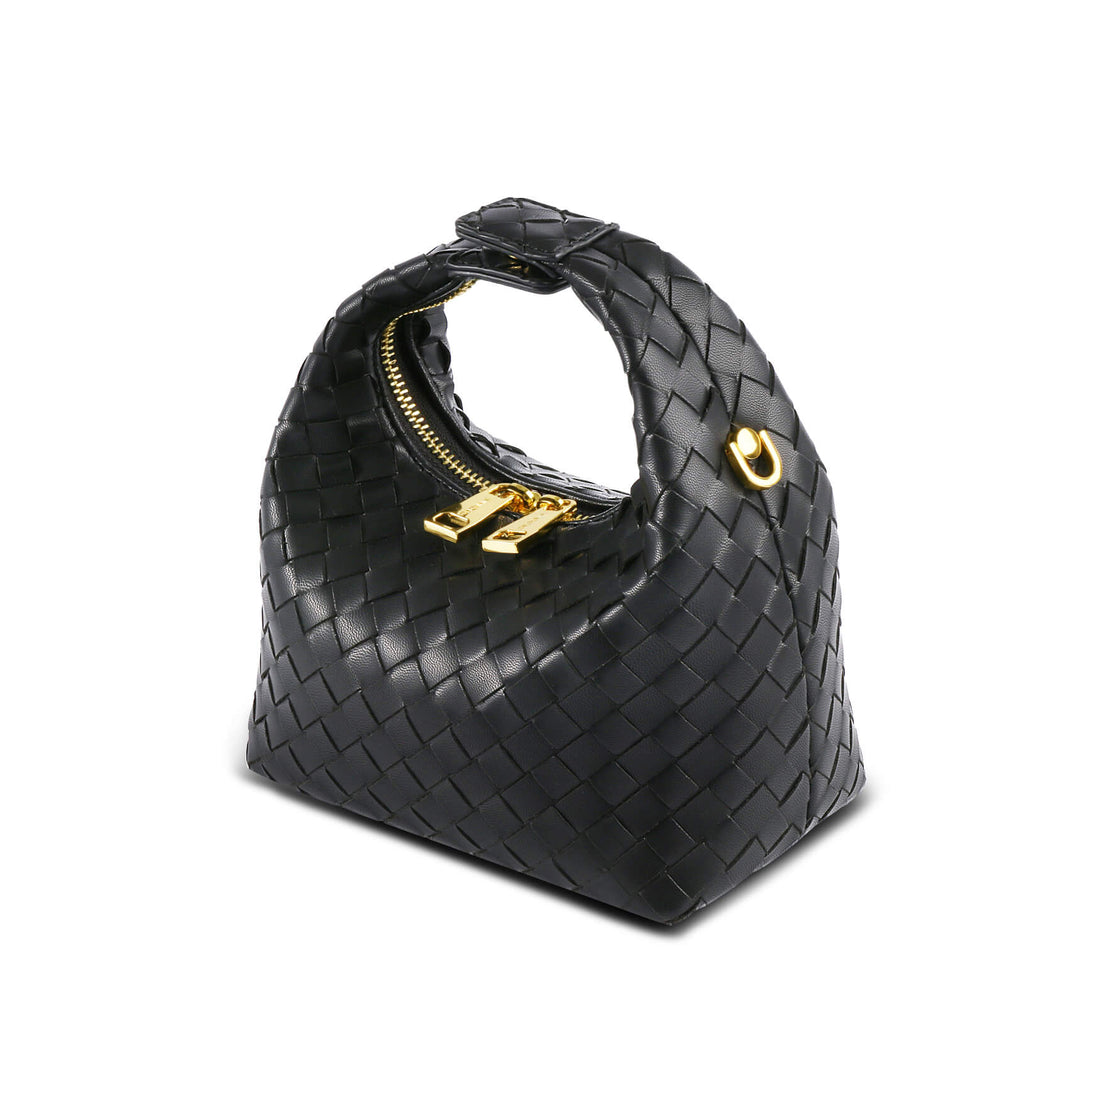 SINBONO Women's Fashion Vegan Leather Crossbody Bag